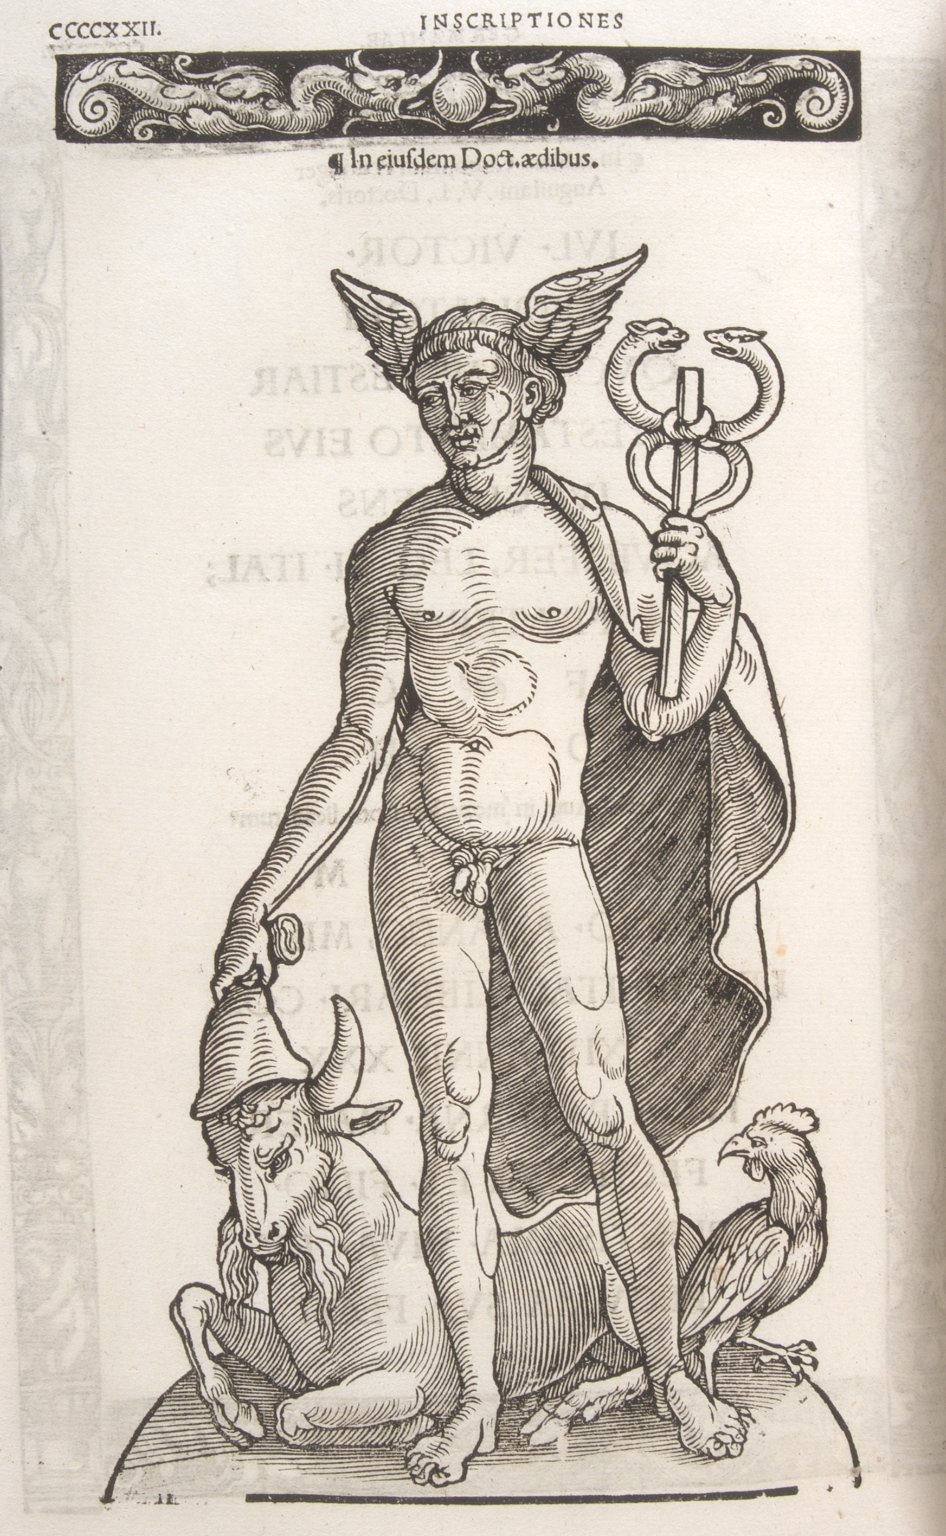 Hermes/Mercury Holding a Caduceus